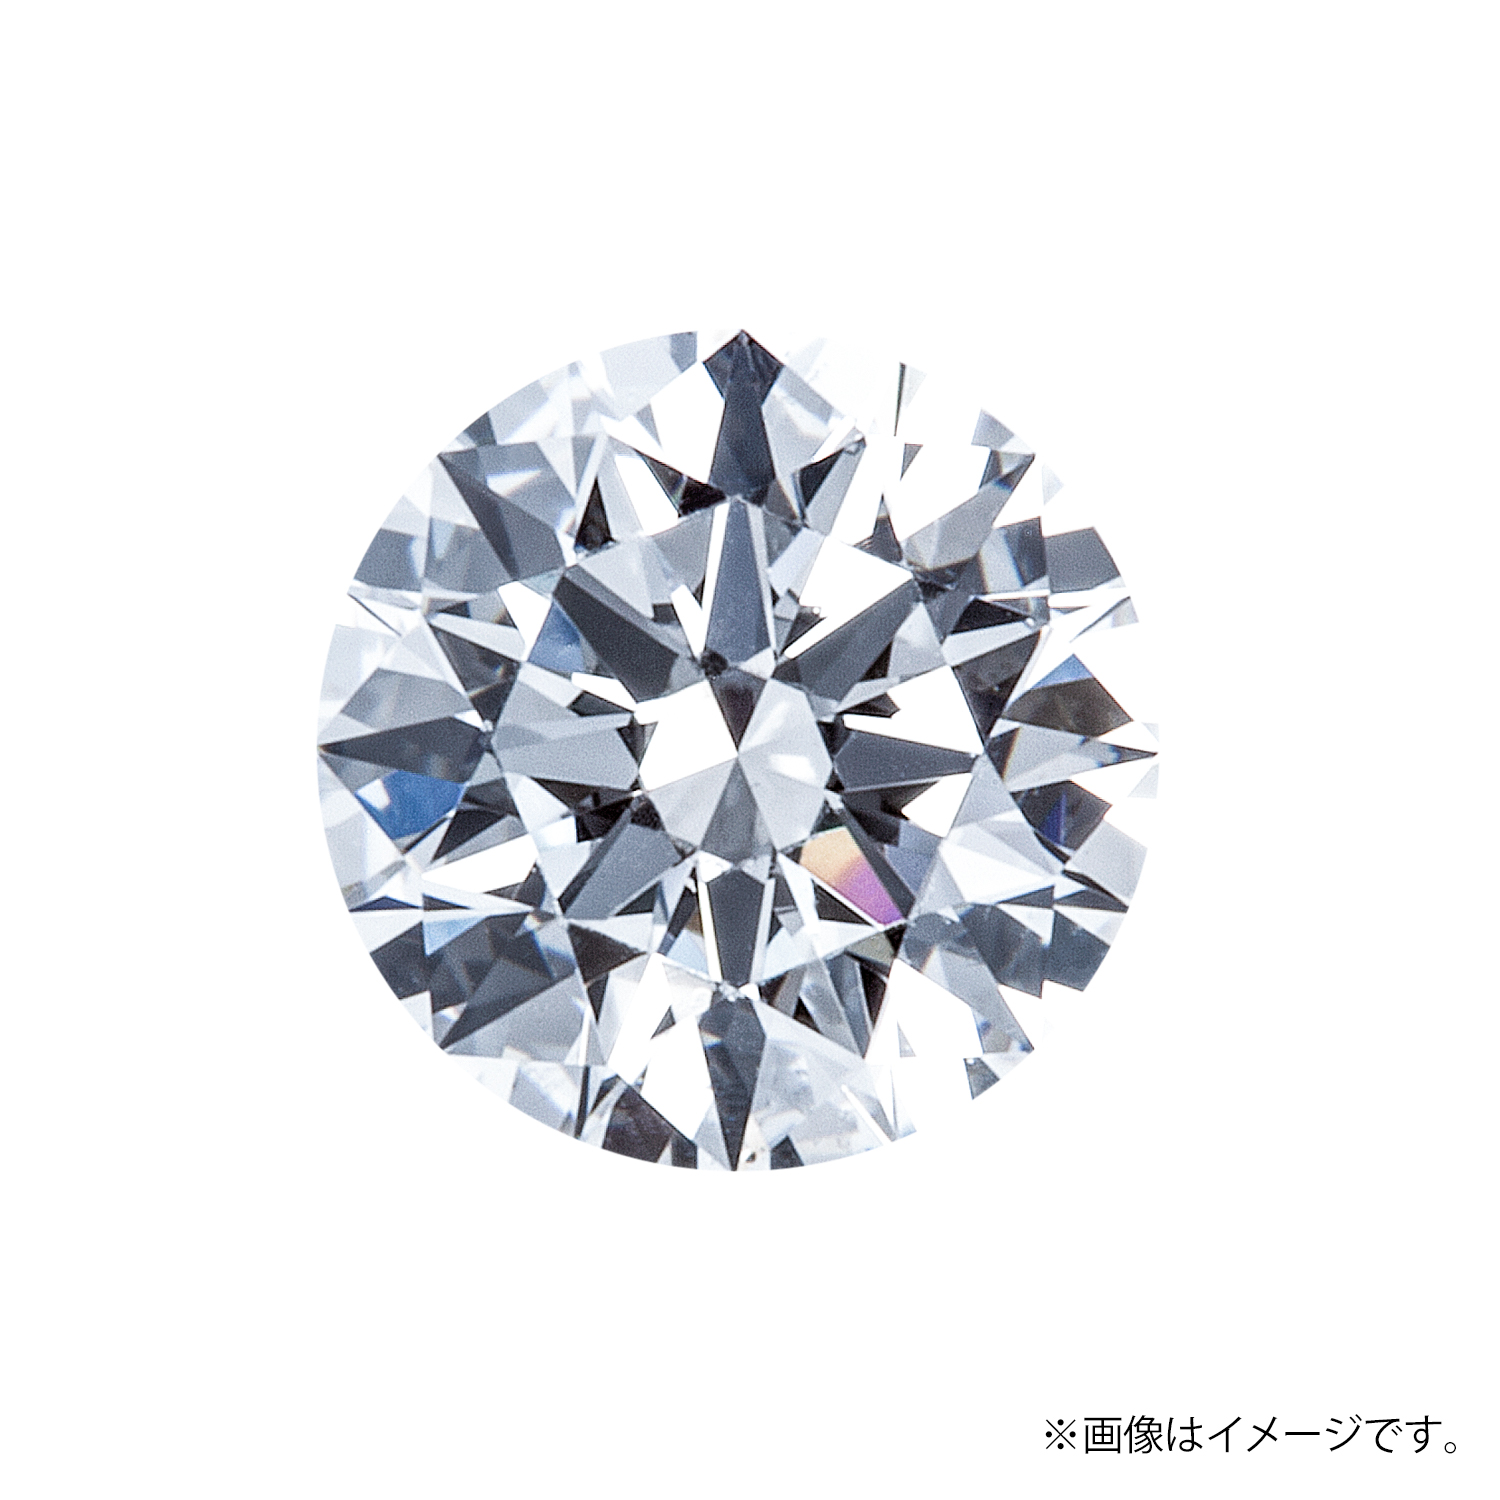 0.163ct Round ダイヤモンド / H / IF / 3EX H&C